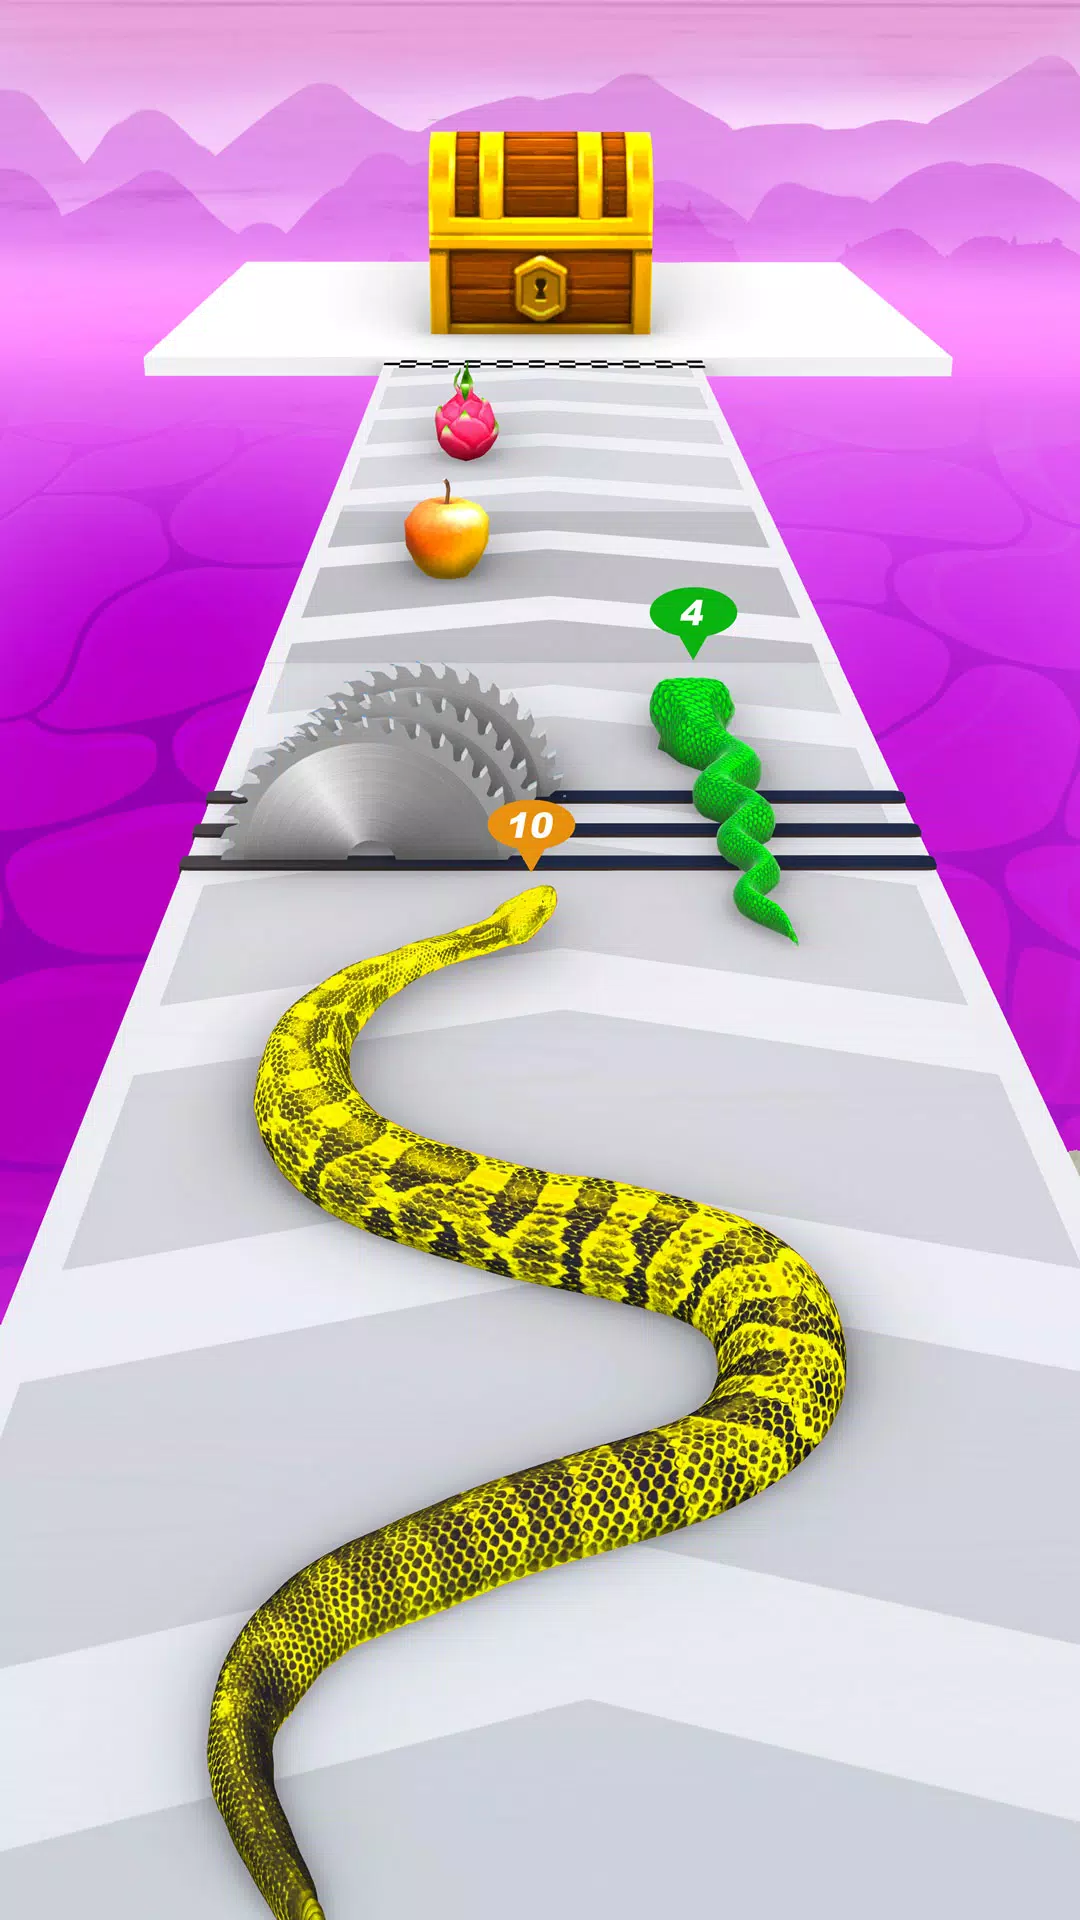 Snake Battle: Worm Snake Game – Apps on Google Play